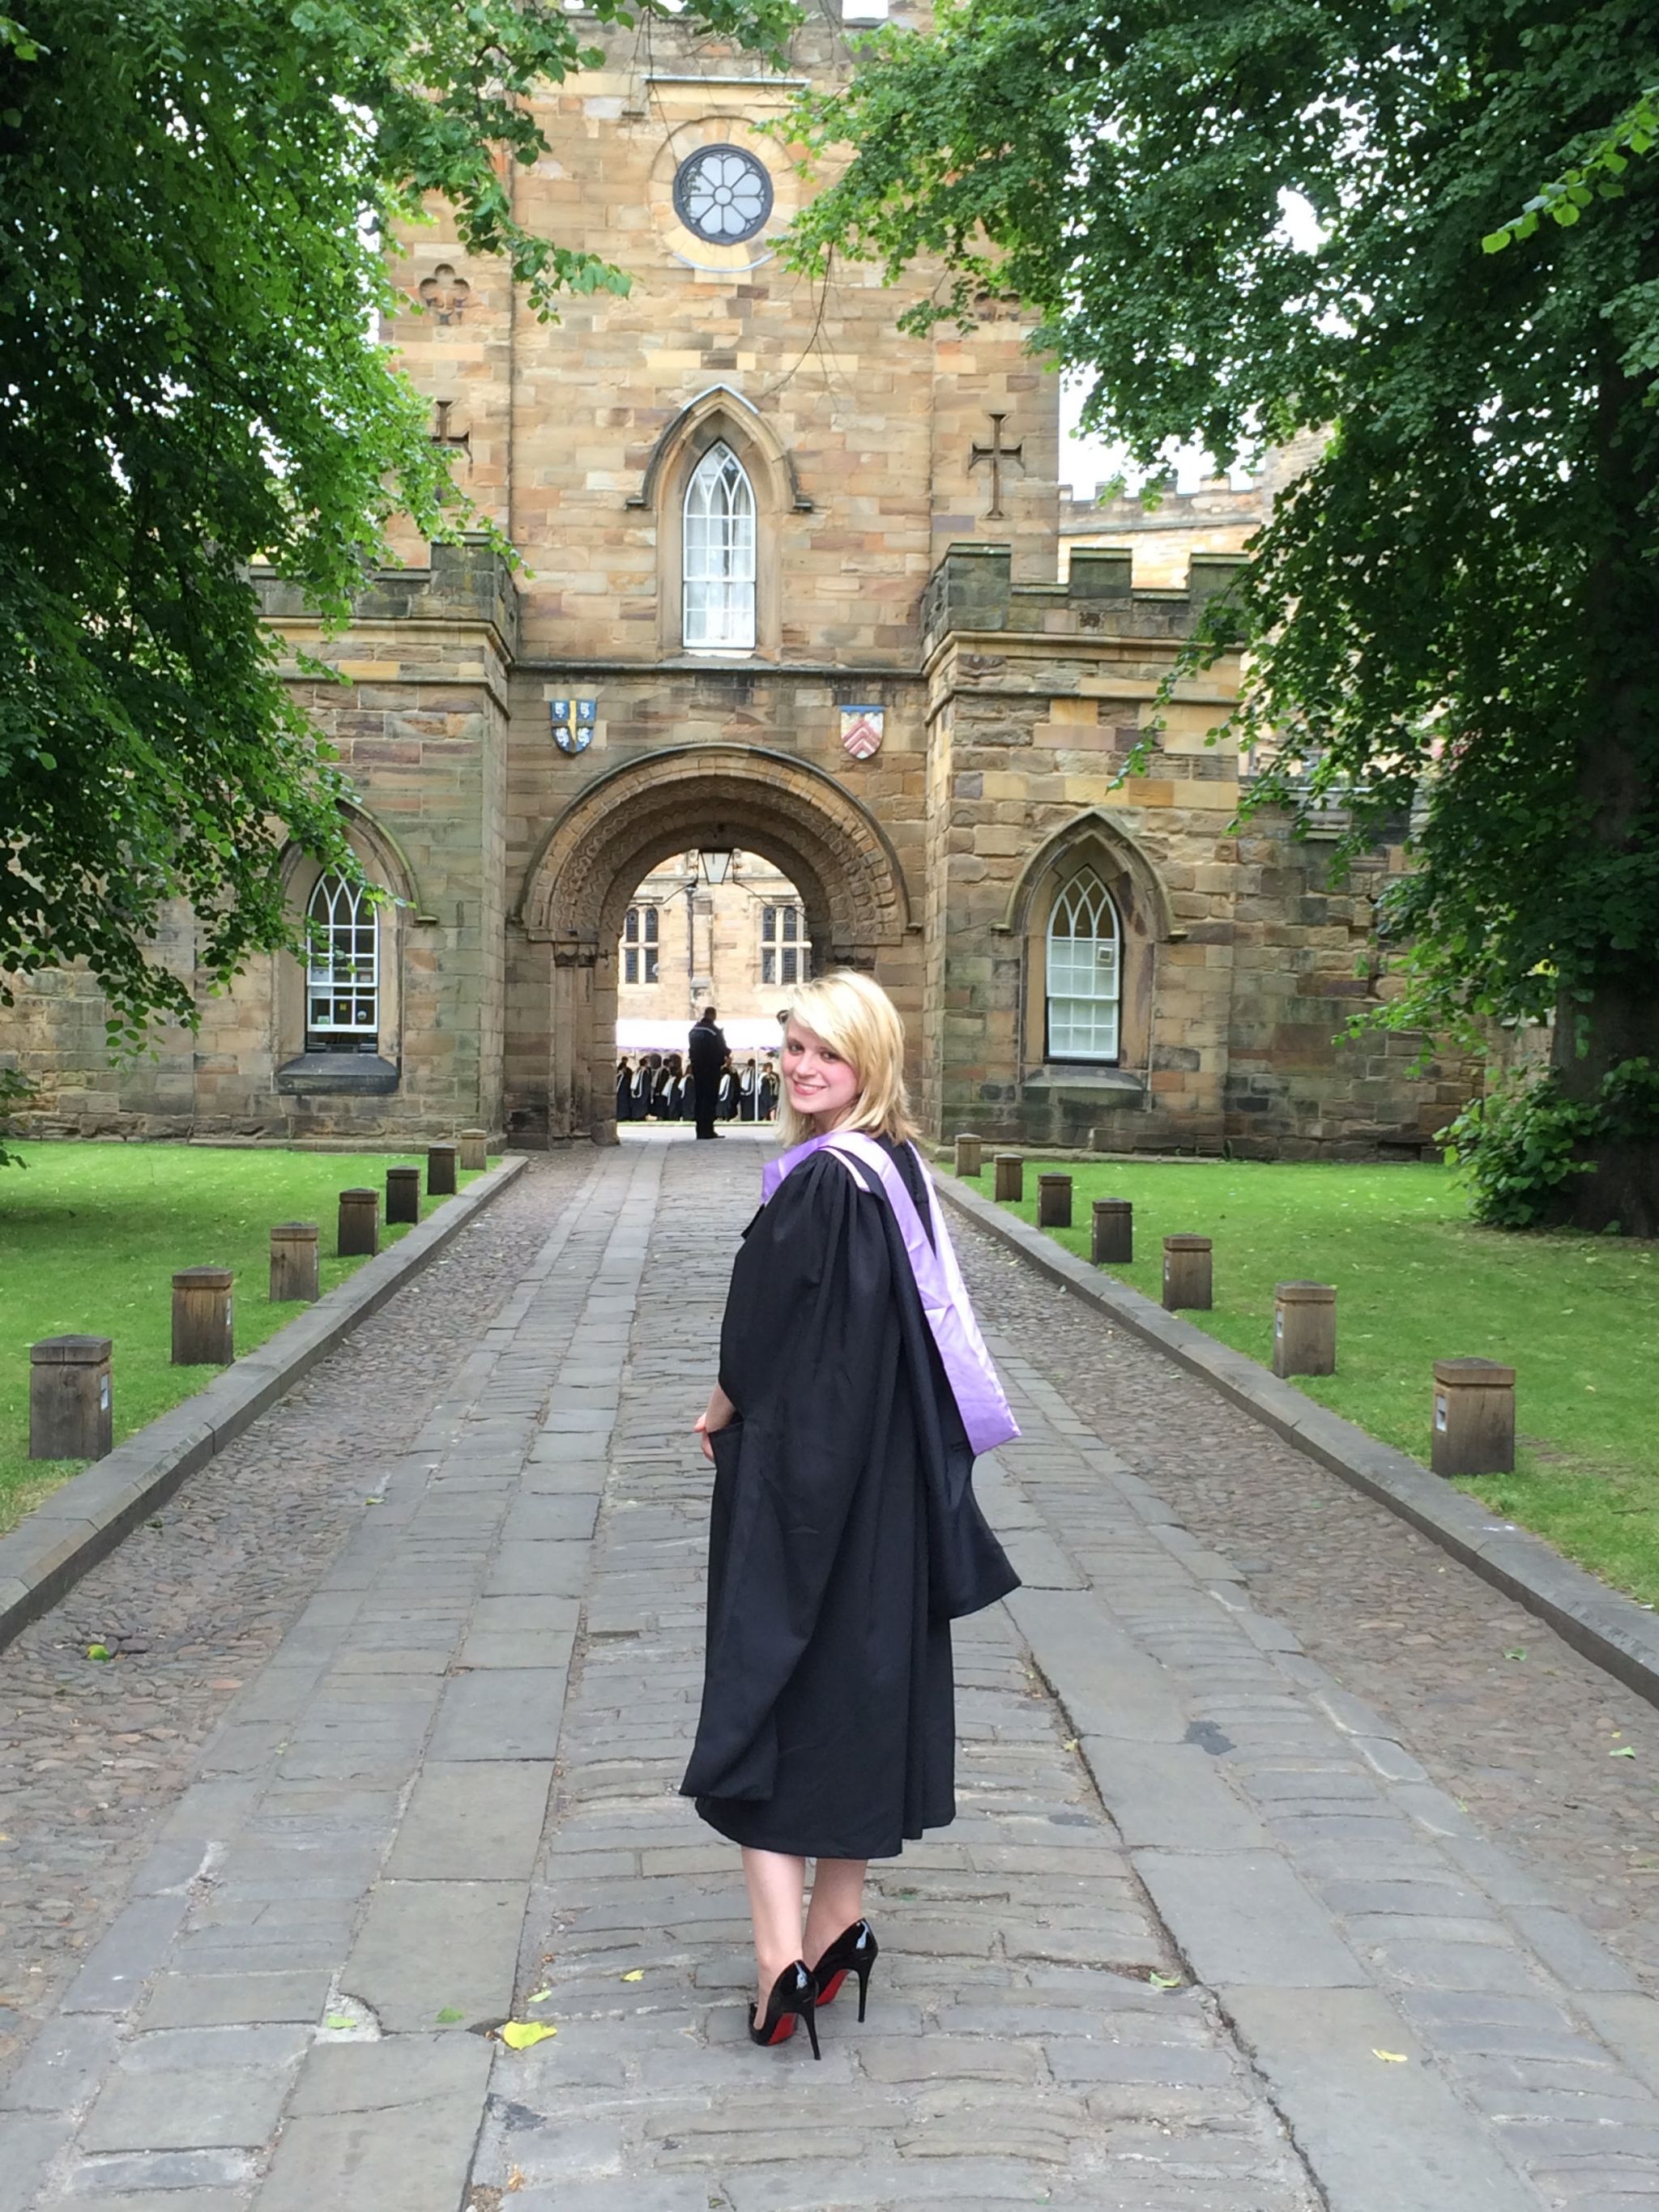 Graduating from Durham University